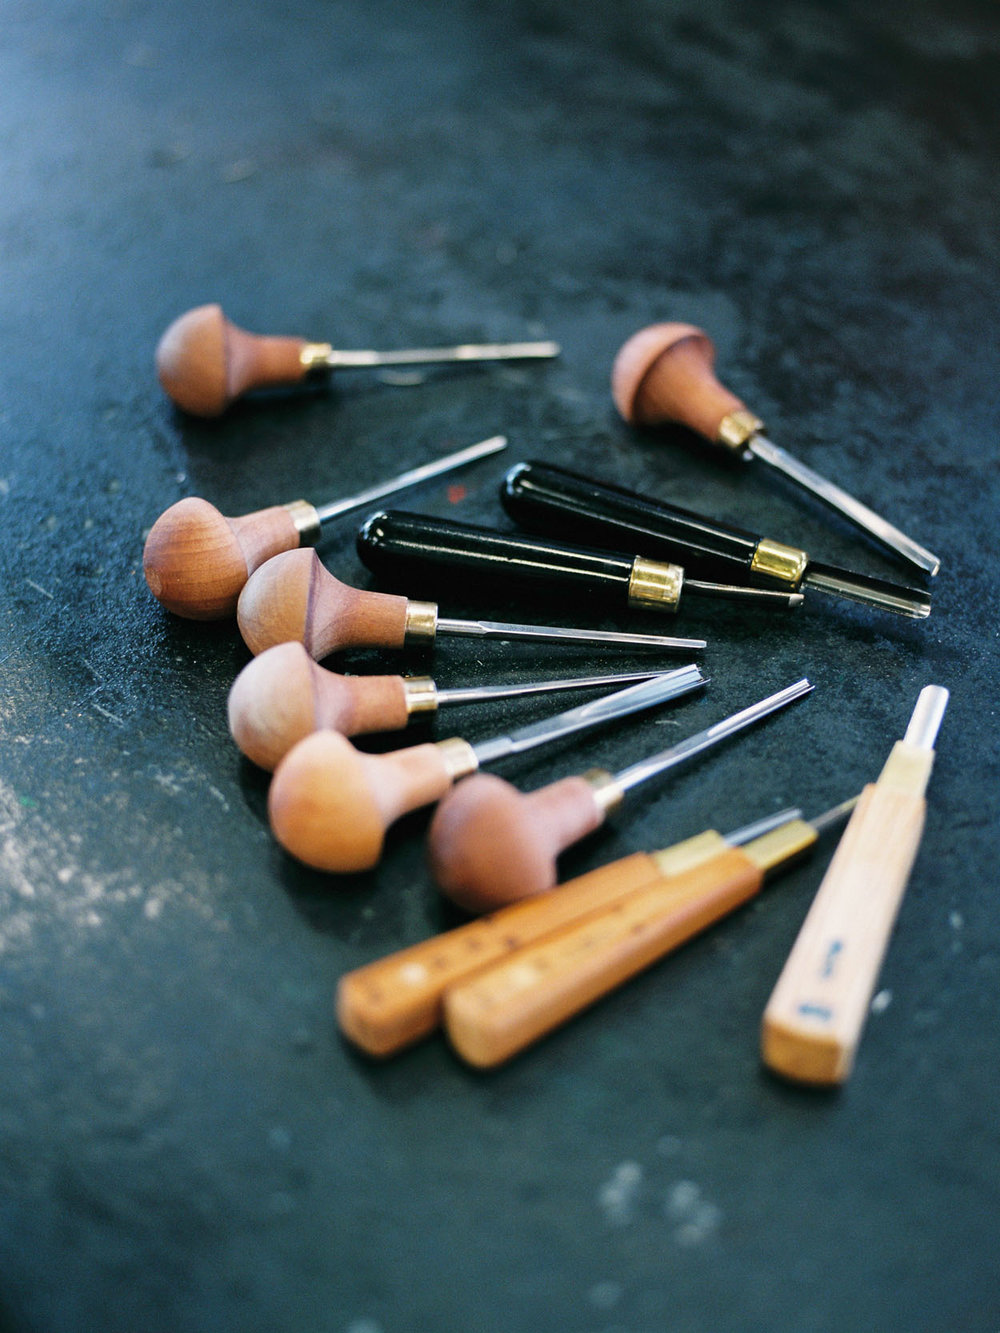 Linocut tools